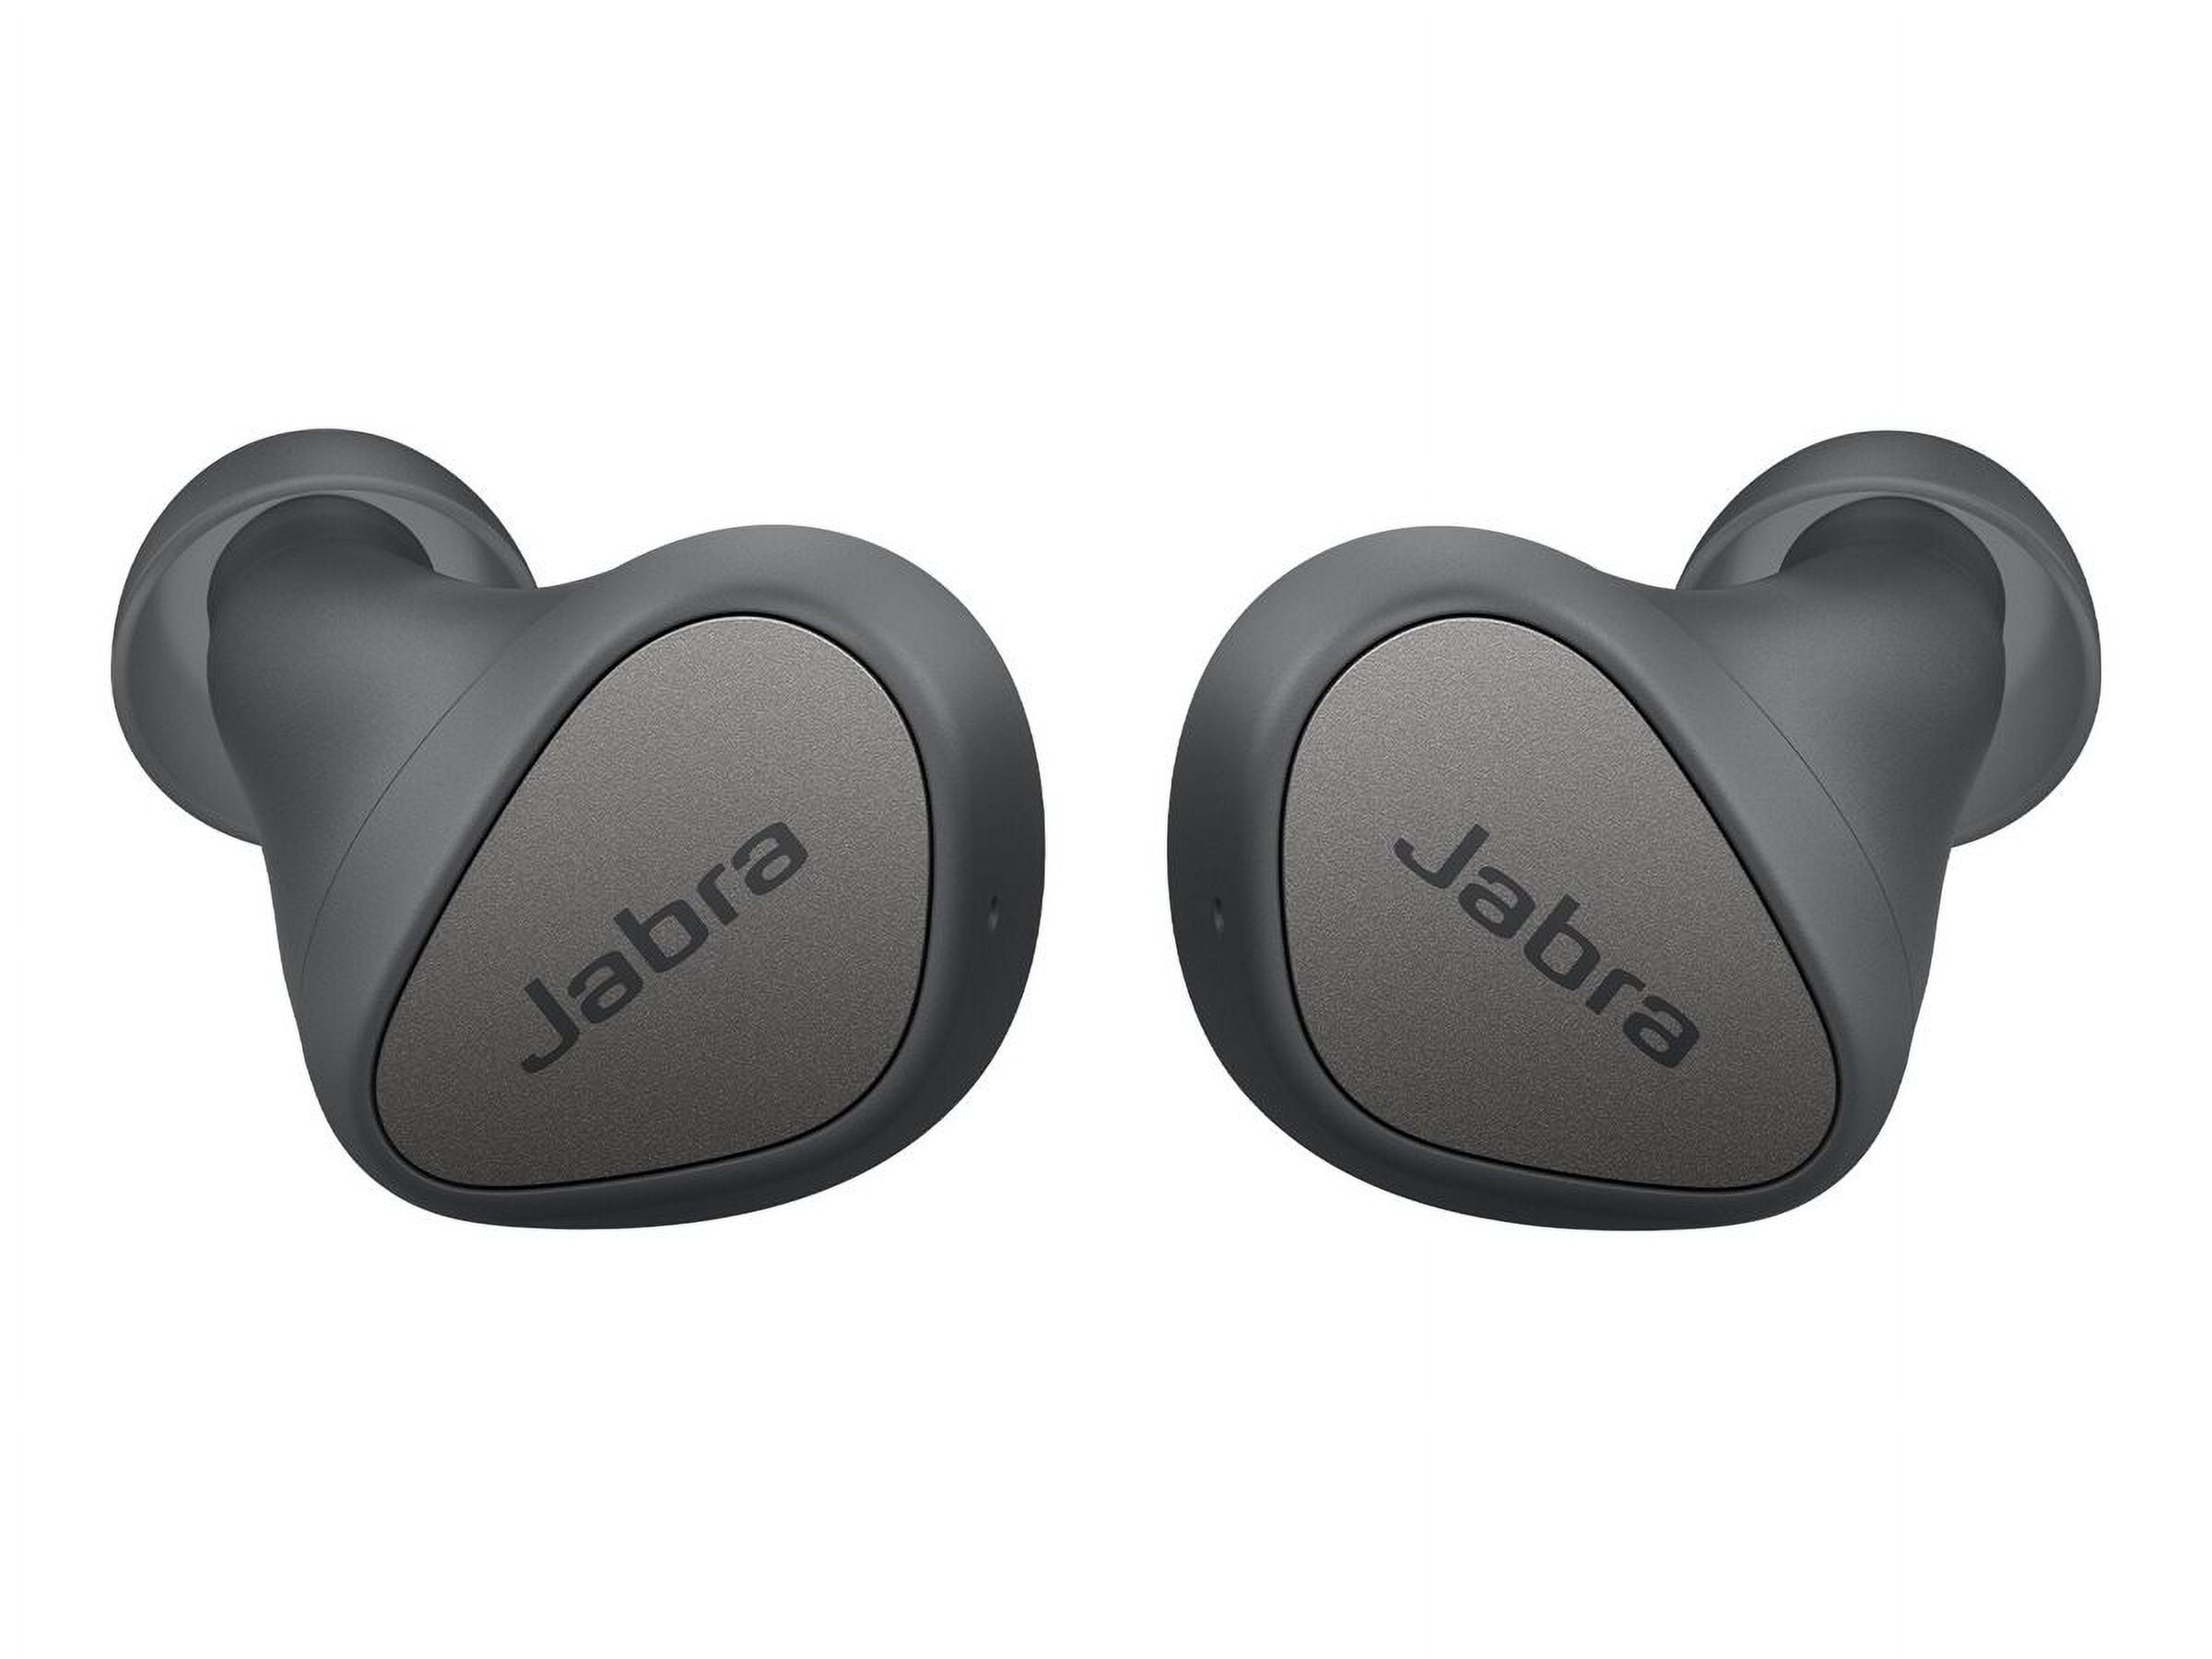 Jabra Elite True Wireless Earbuds, Noise Cancelling, Dark Grey Walmart.com